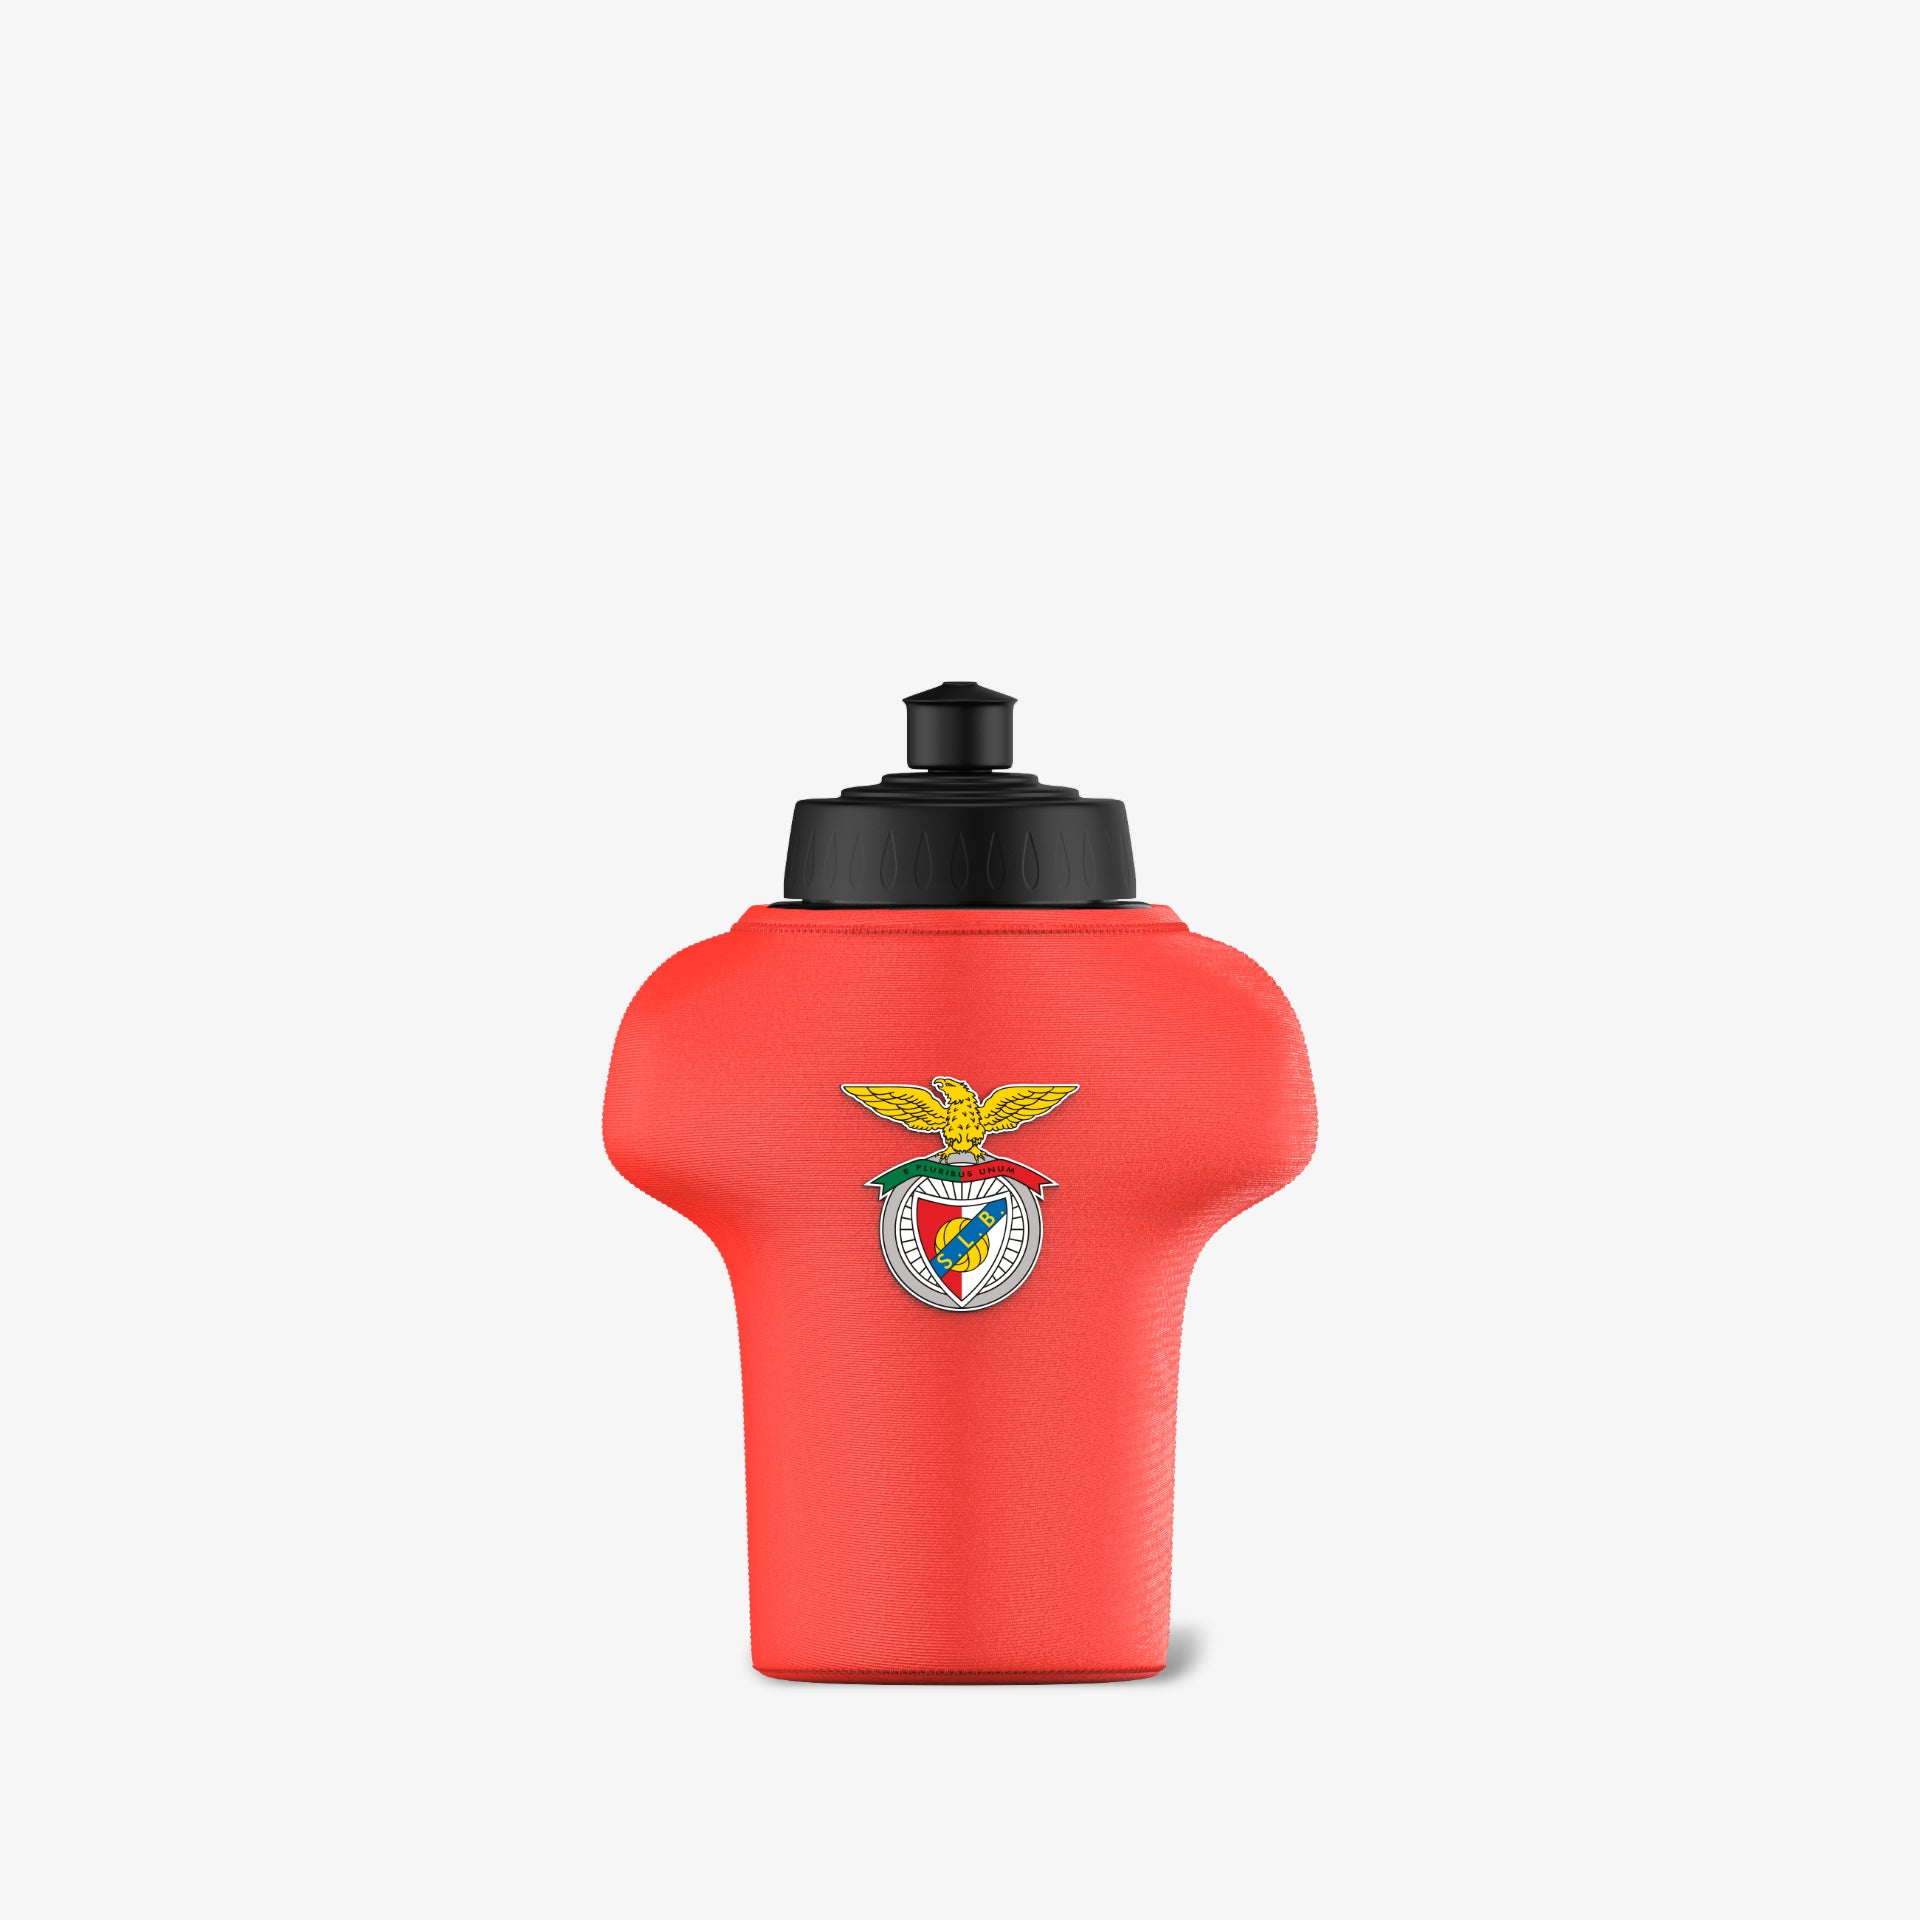 Benfica bottle and bottle sleeve